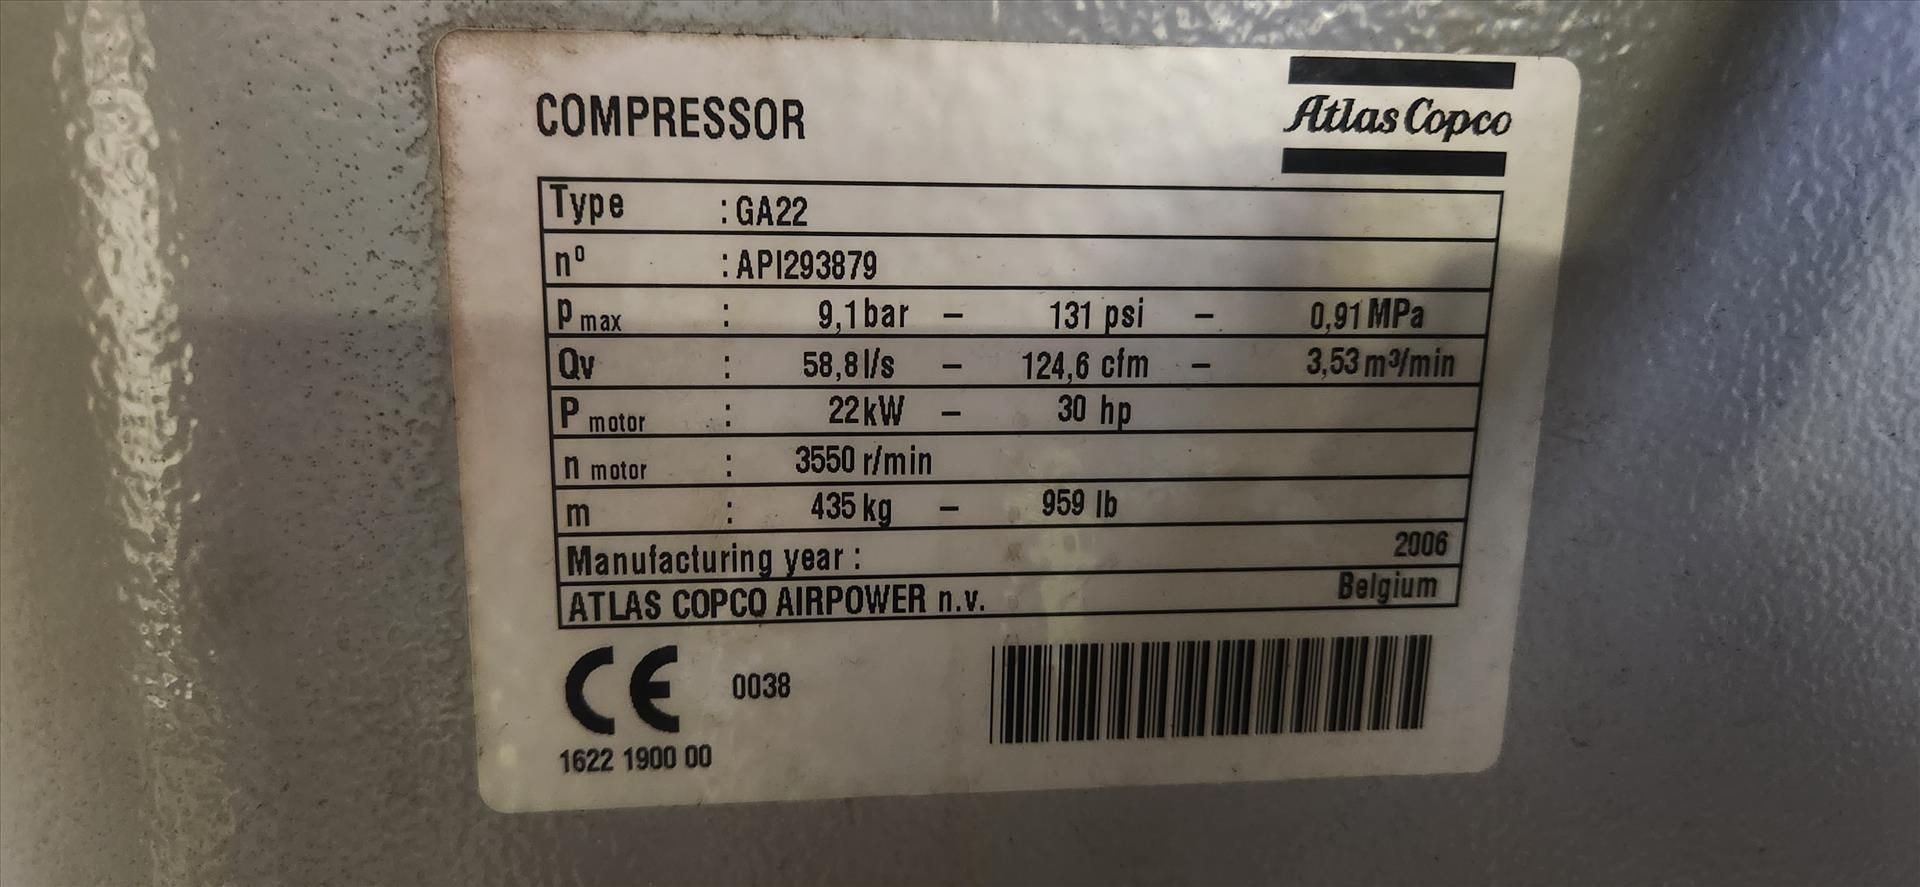 AtlasCopco air compressor, mod. GA22, ser. no. AP1293870, 30 hp [Loc. Basement - Ryding] - Image 2 of 2